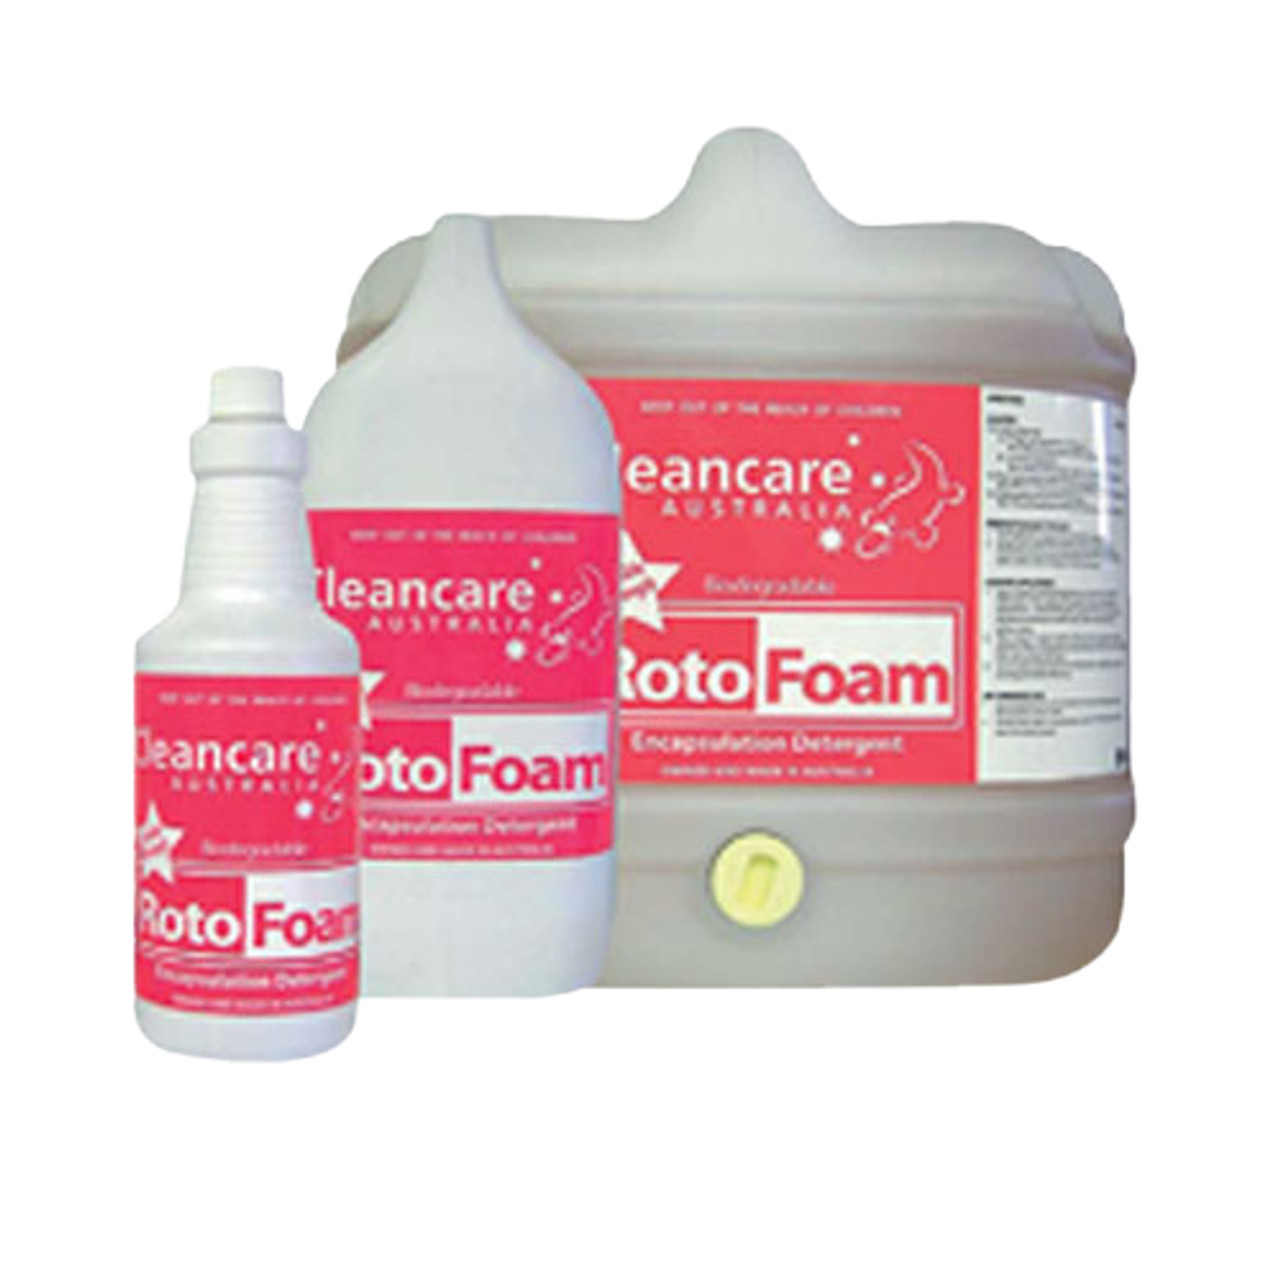 Roto Foam Encapsulation Shampoo